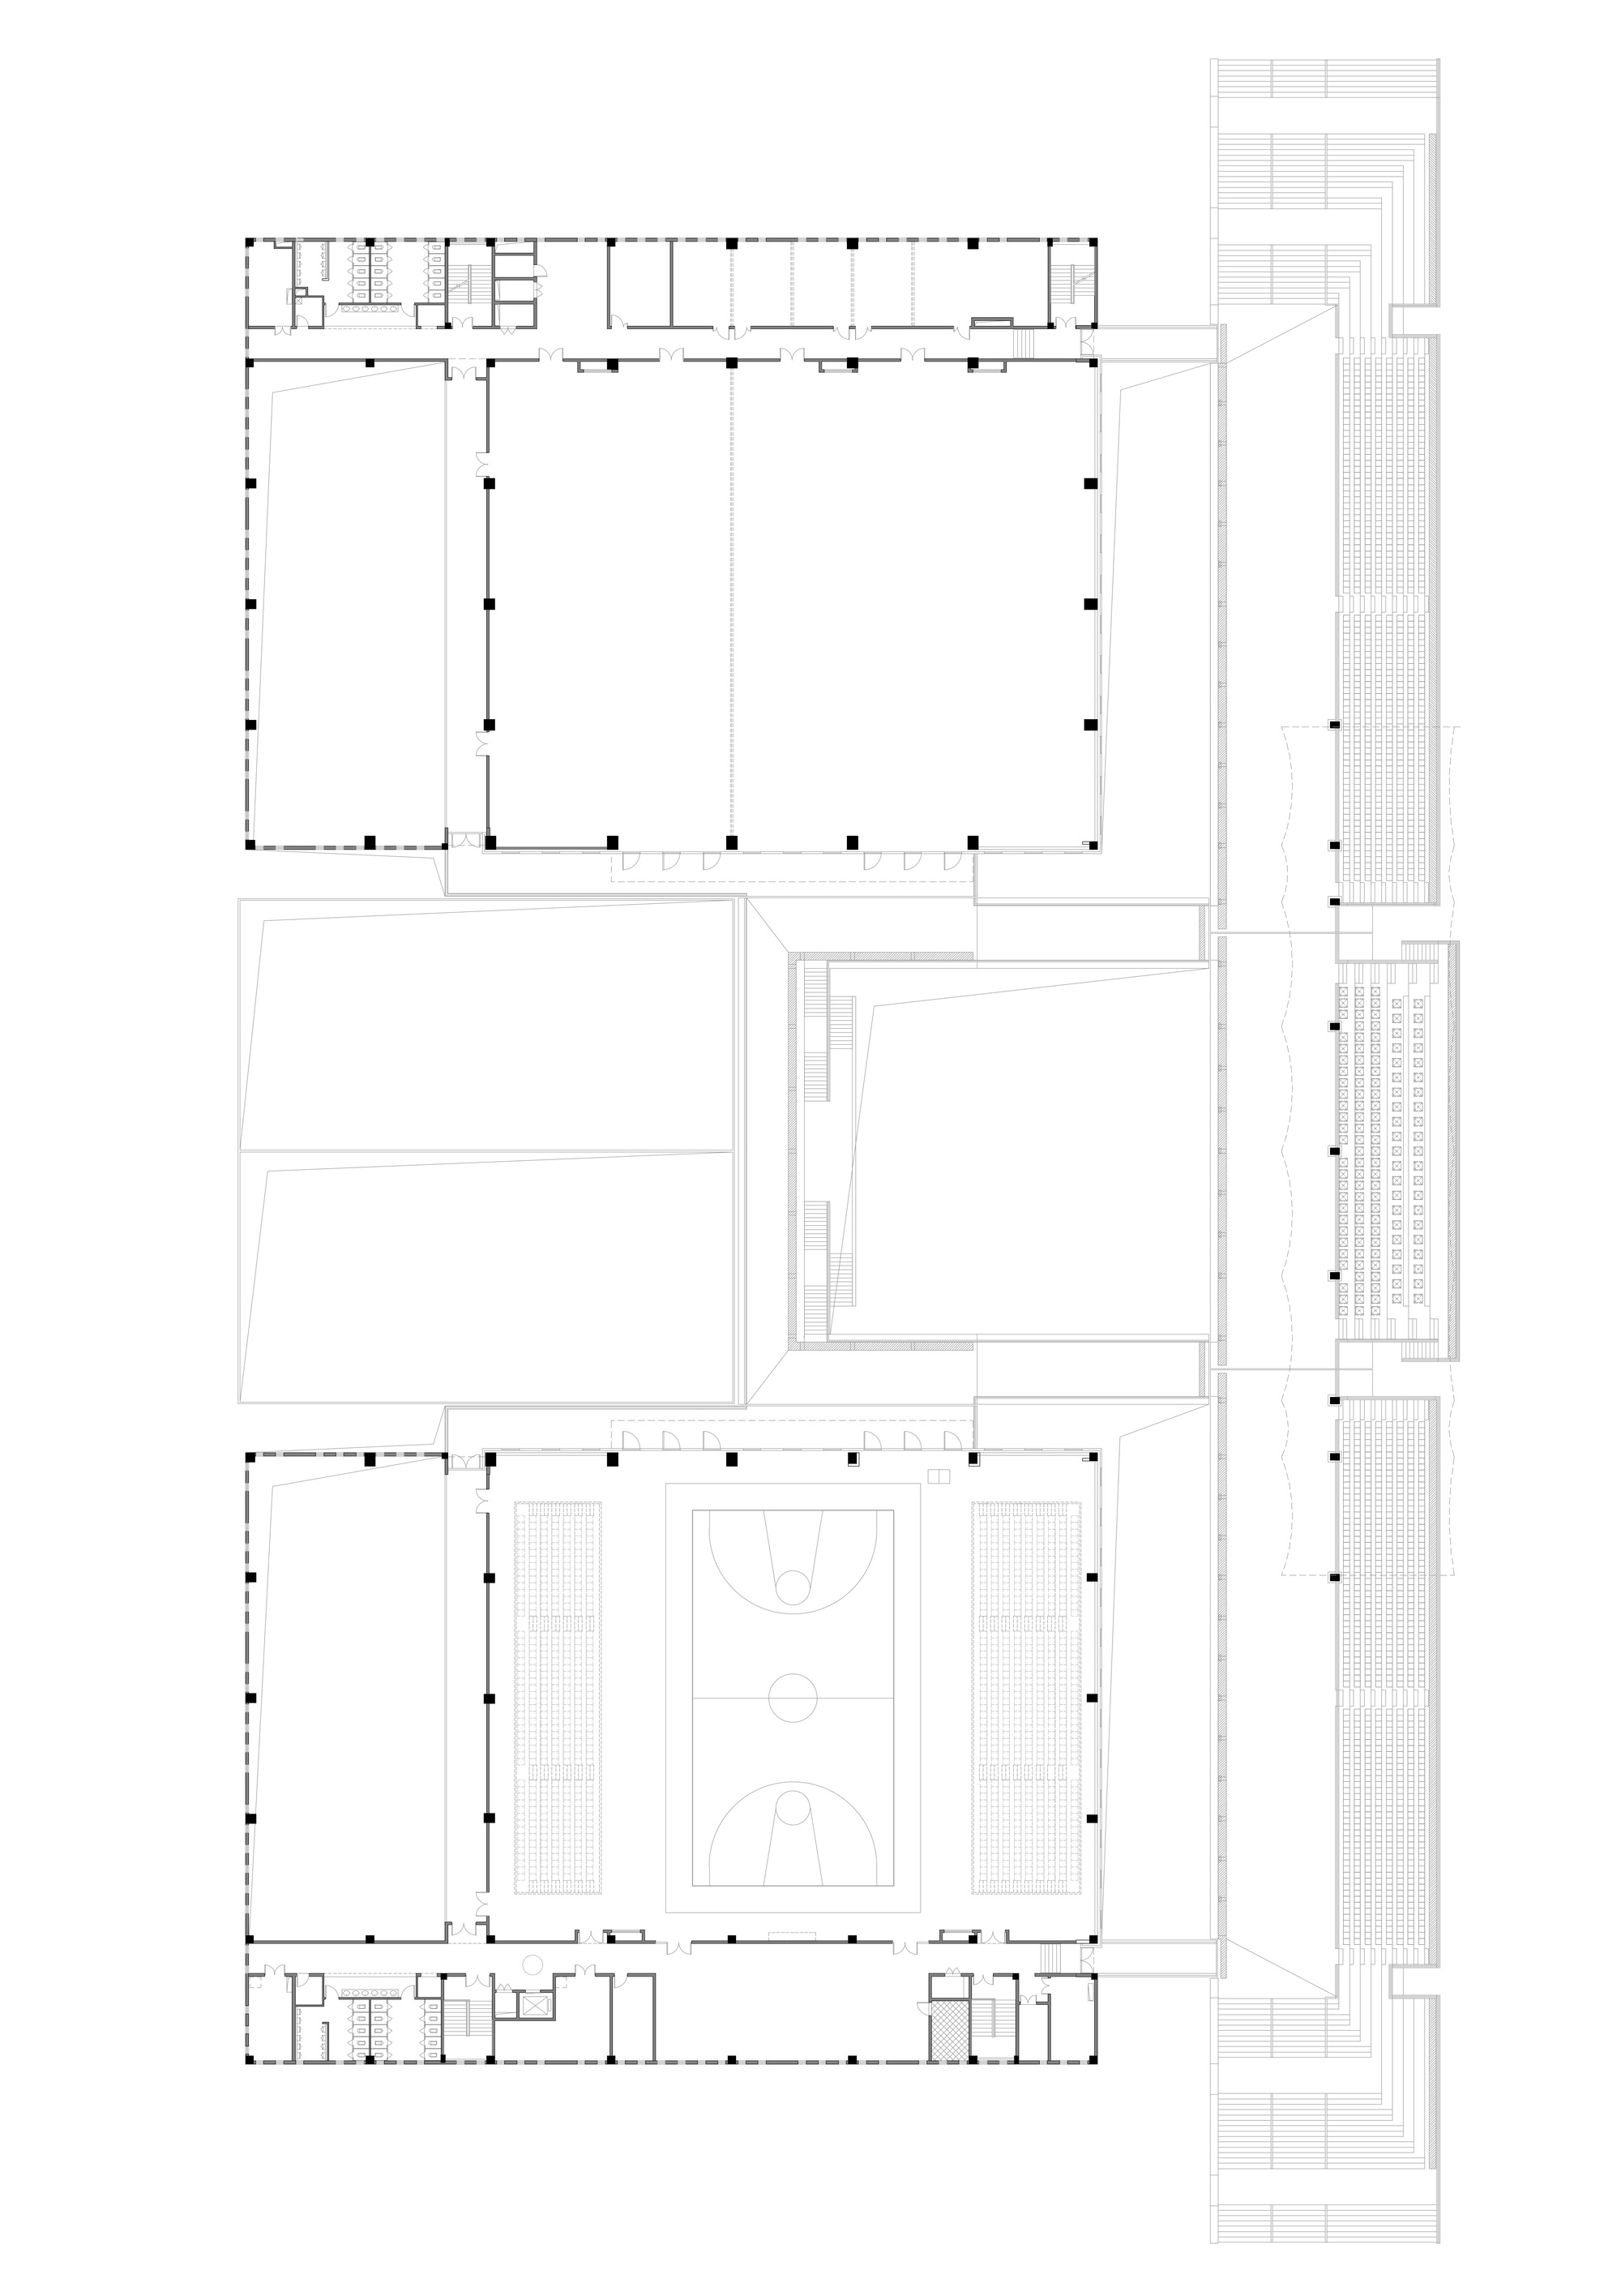 15_Drawing006_The_second_underground_floor_plan.jpg